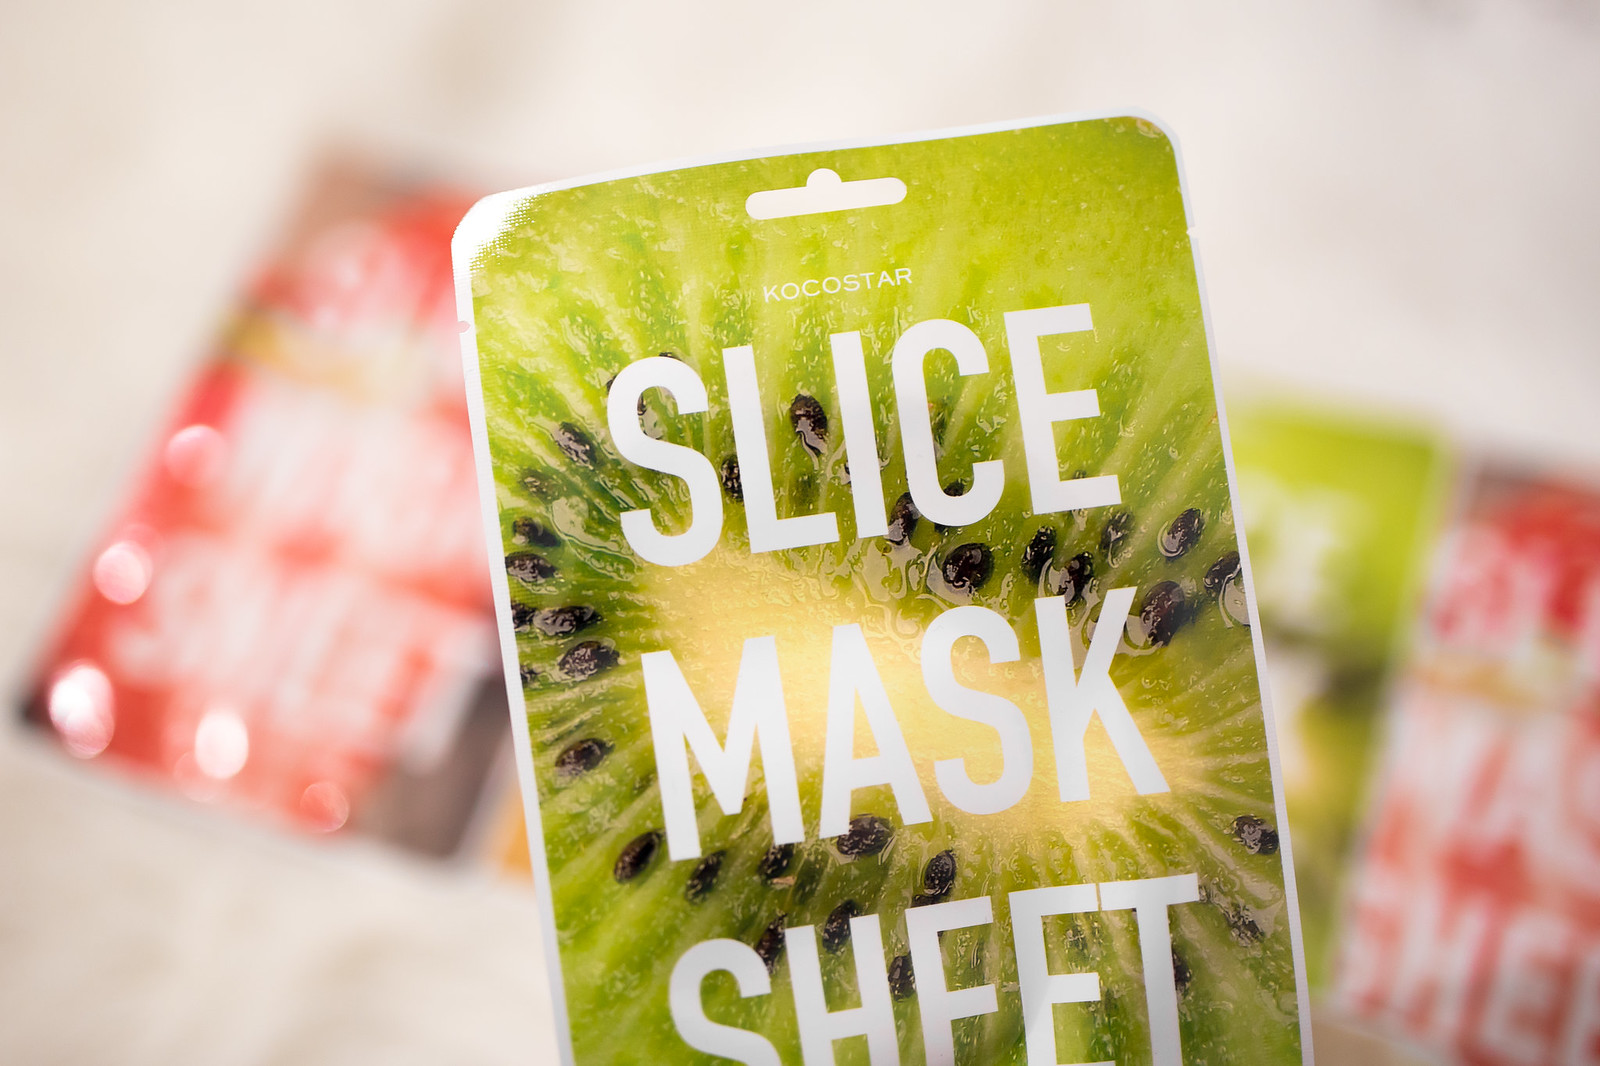 slice mask sheet